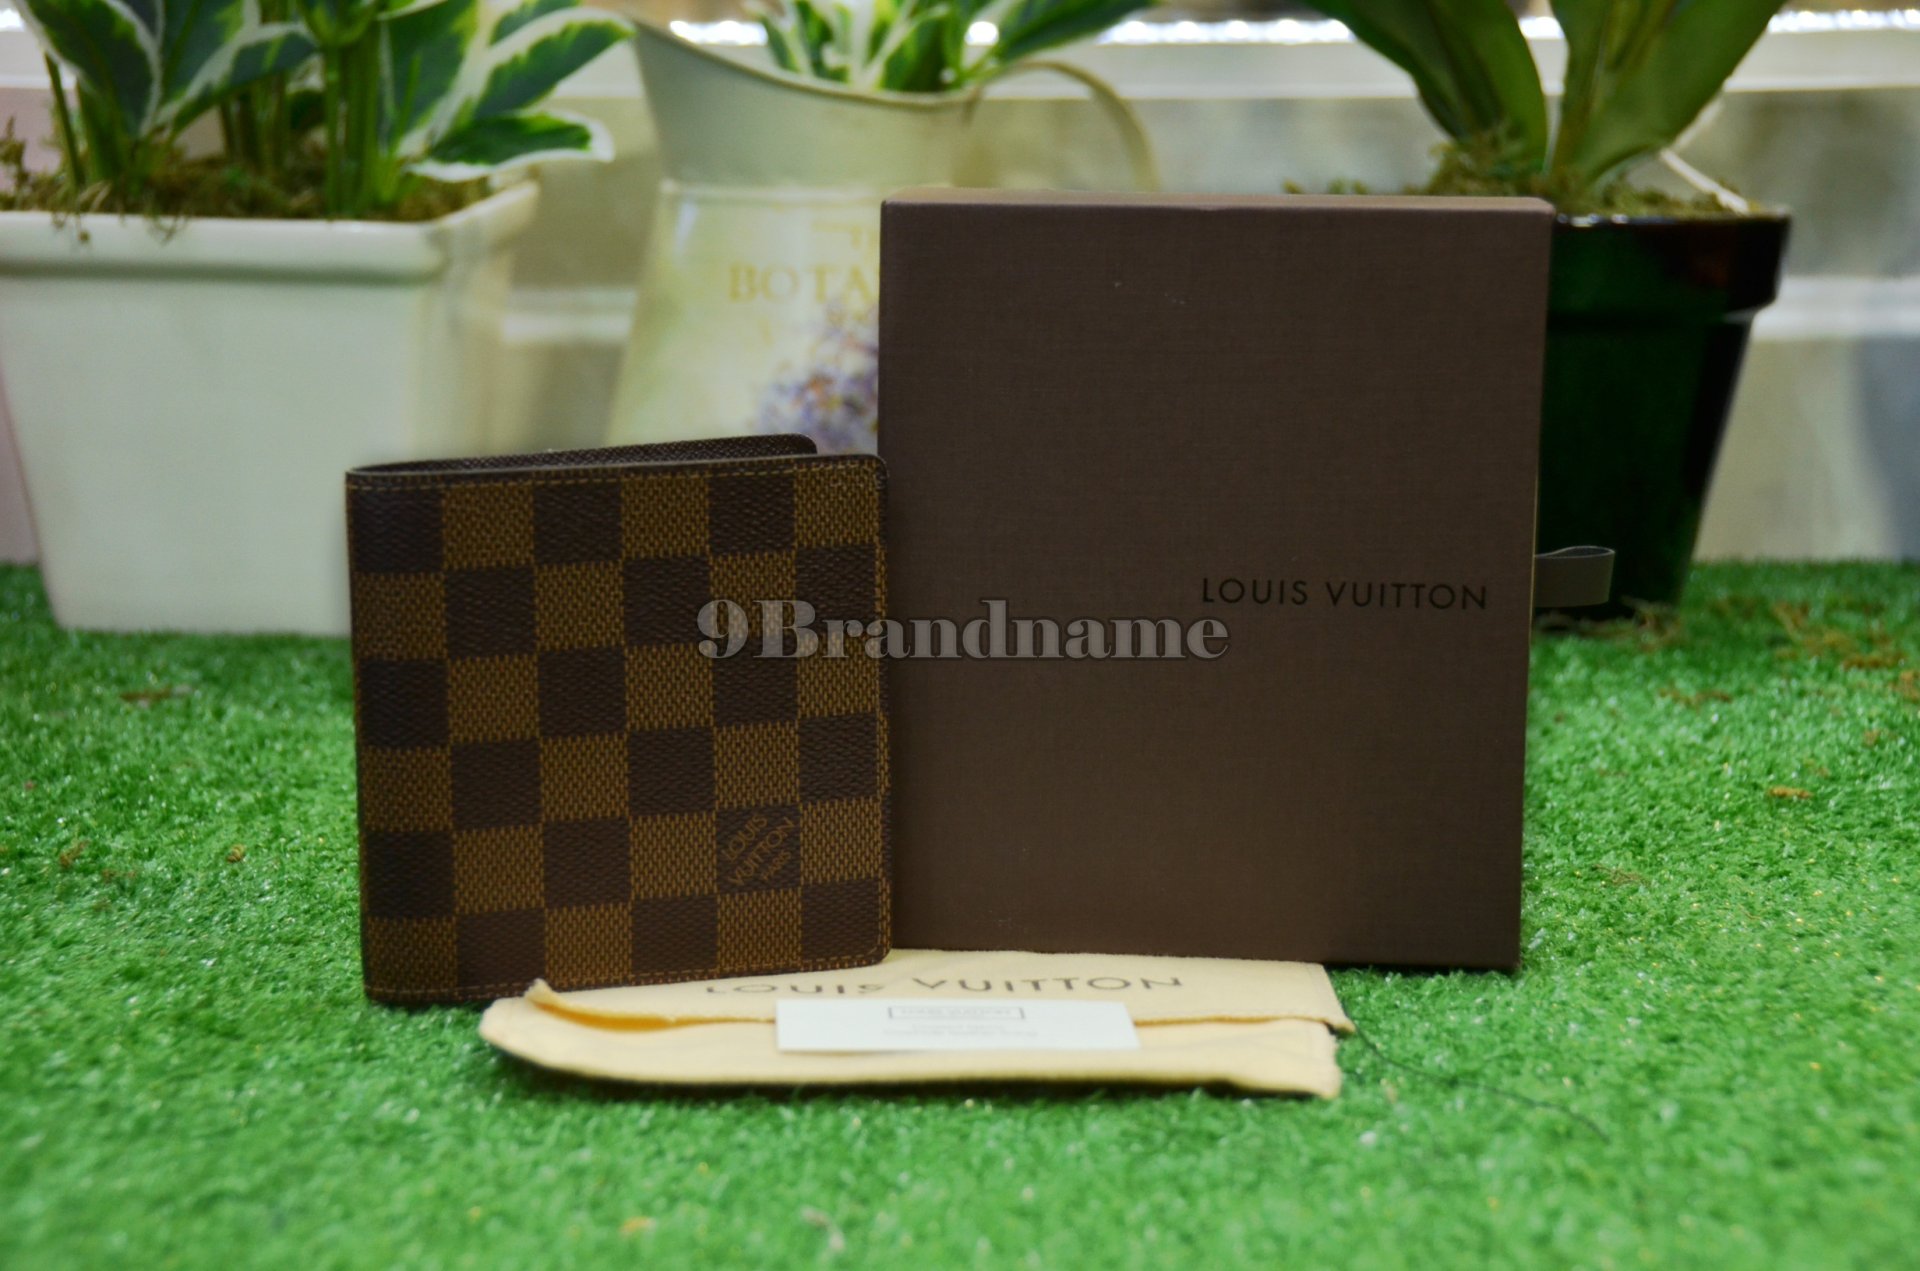 Louis Vuitton Multiple Wallet Damier - Used Authentic Bag - 9brandname